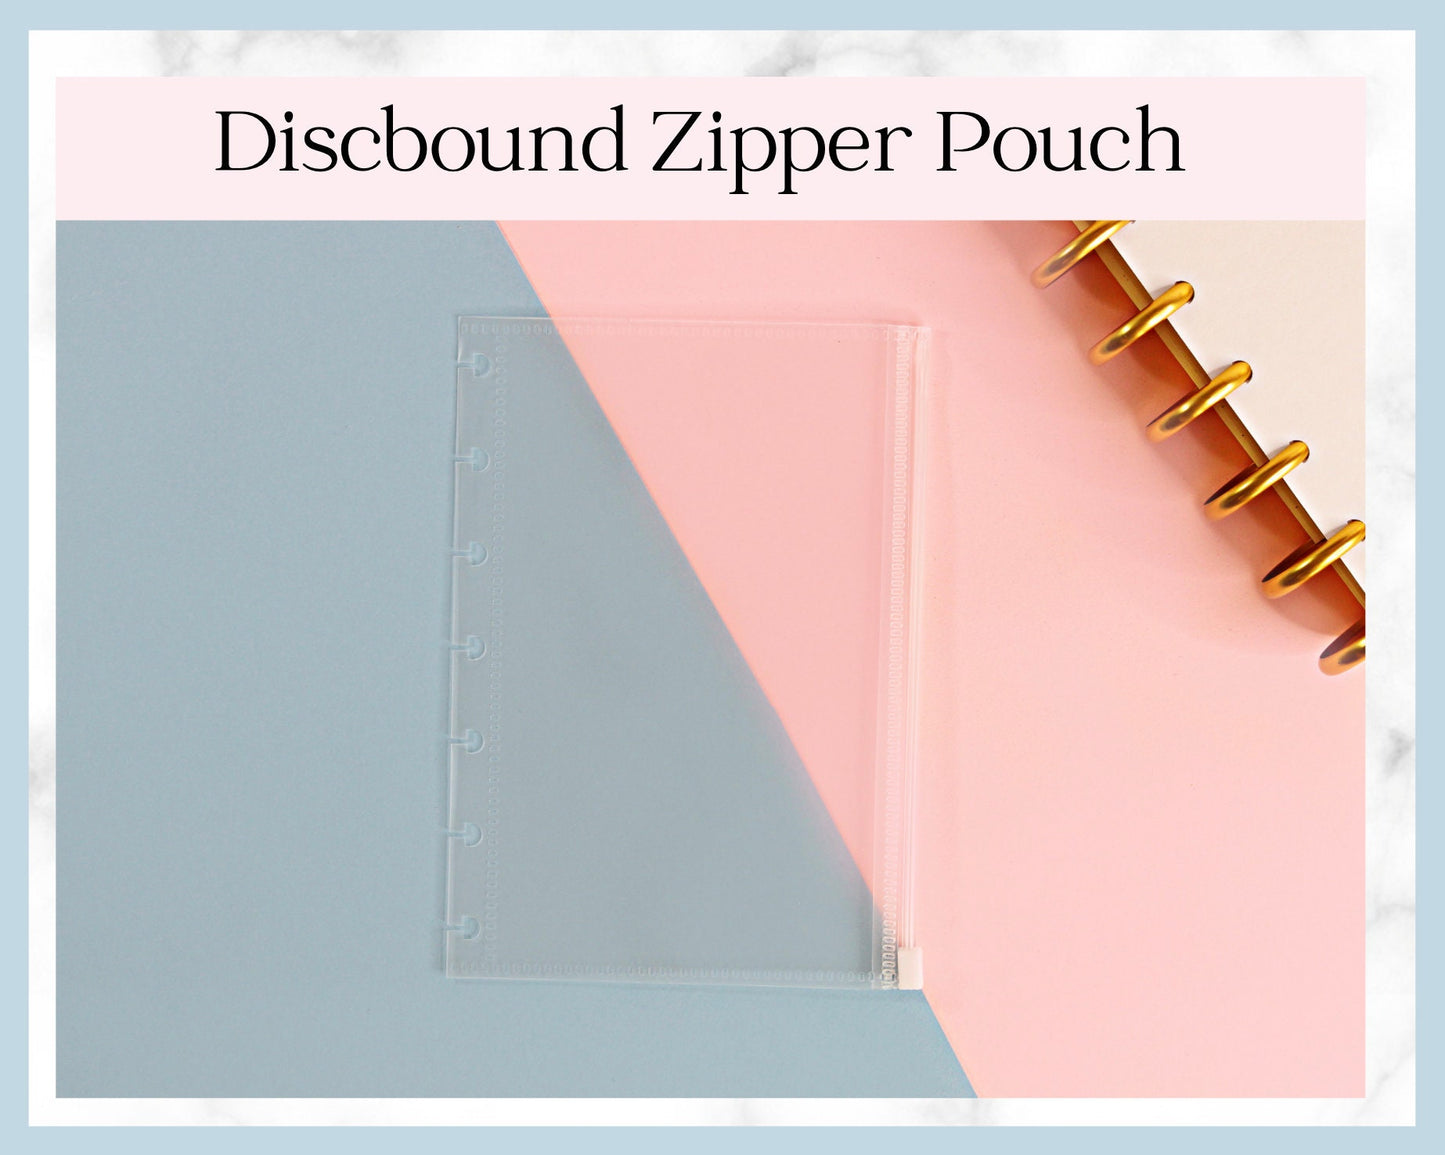 ZIPPER POUCH Discbound  B6 Size, 7 Hole Punch, HP Mini, Plastic